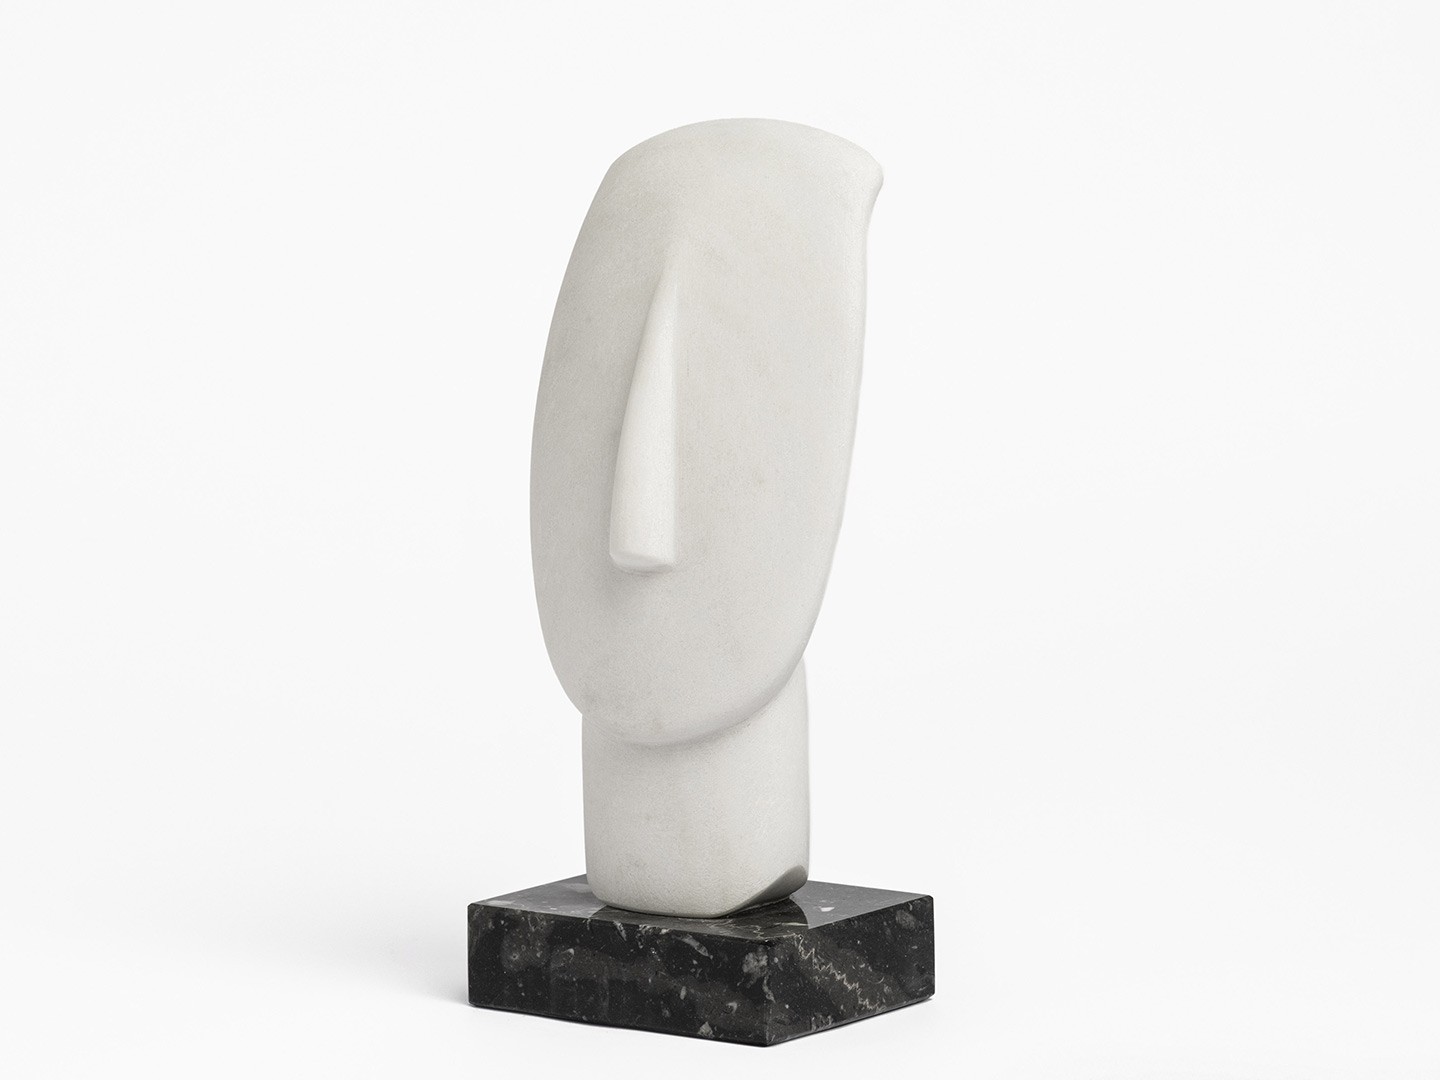 Female Figurine Head of the “Folded Arms” Type Replica.